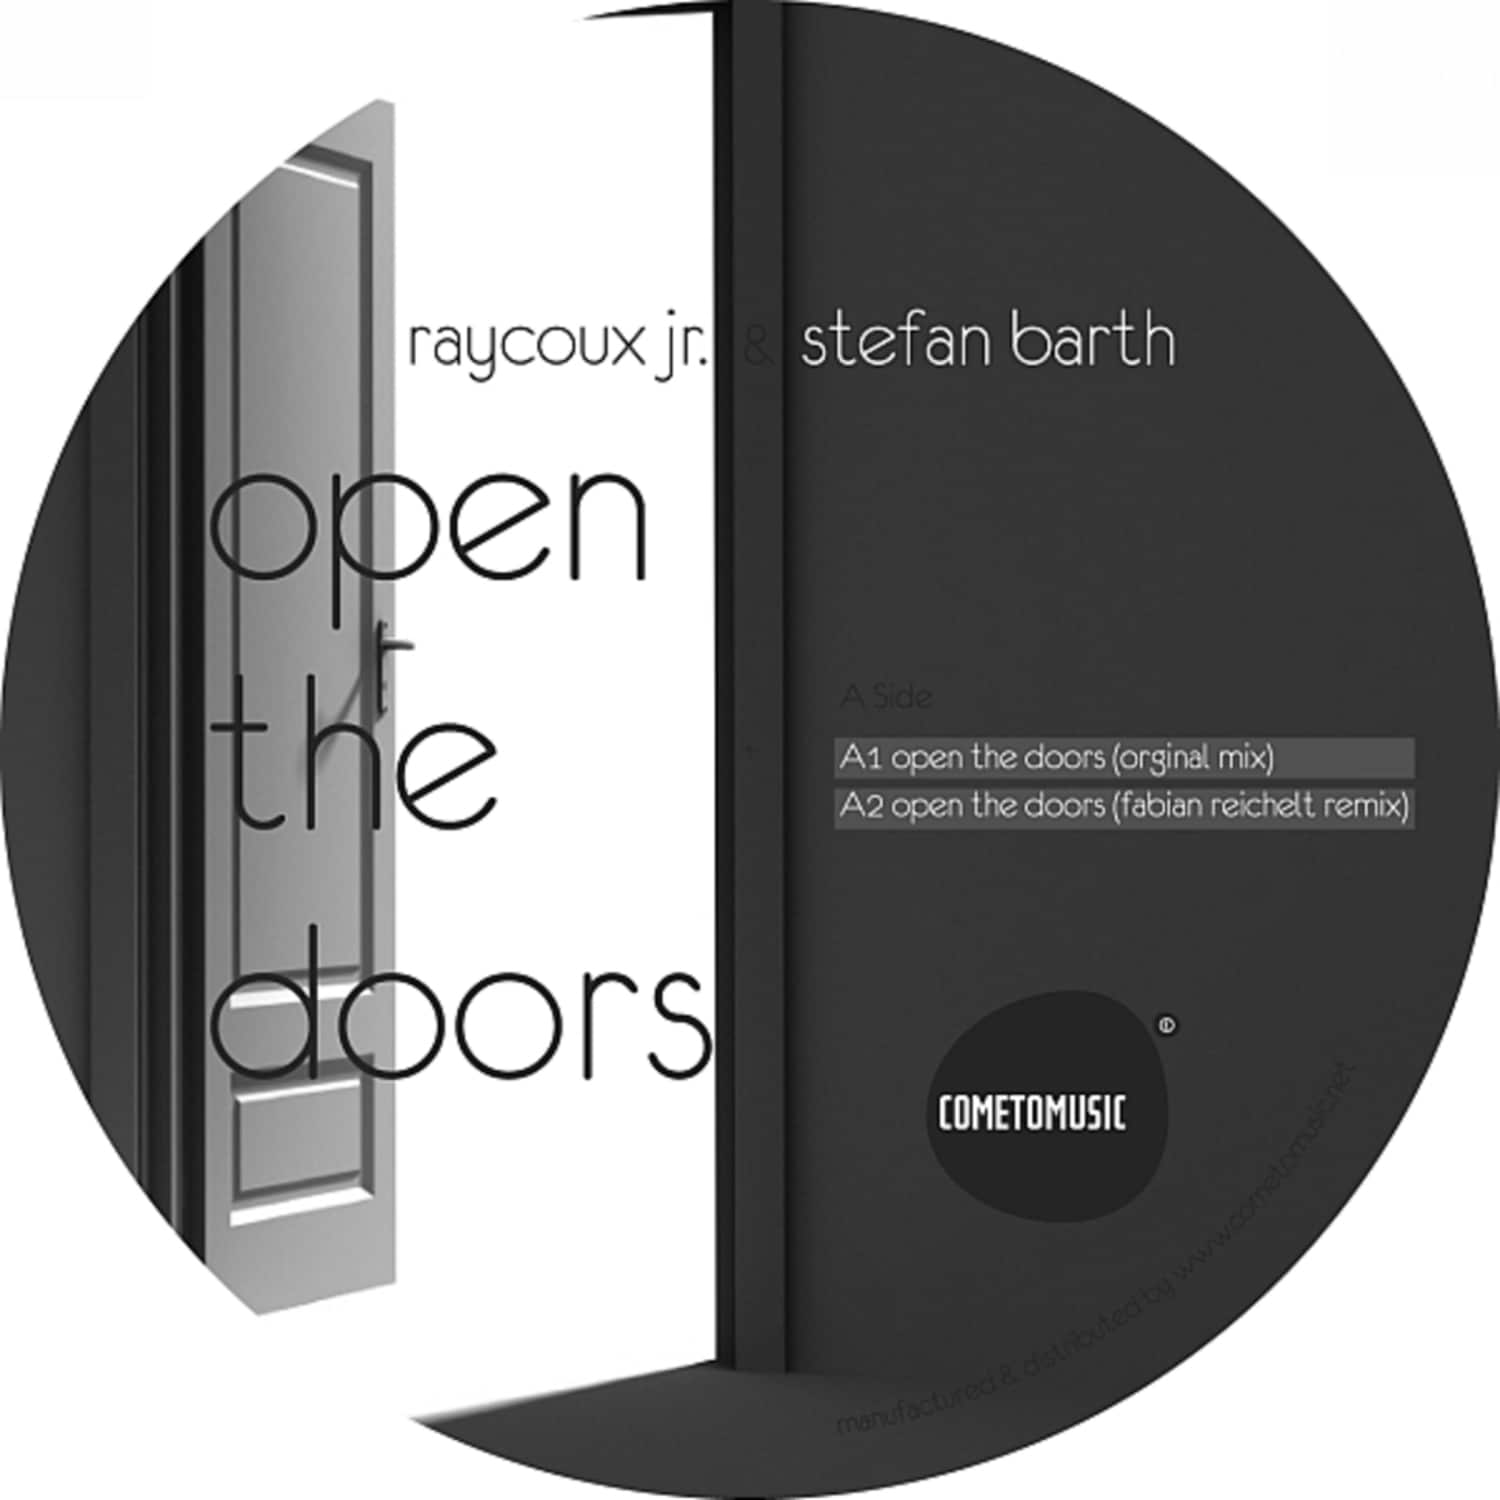 Raycoux Jr. & Stefan Barth - OPEN THE DOORS 